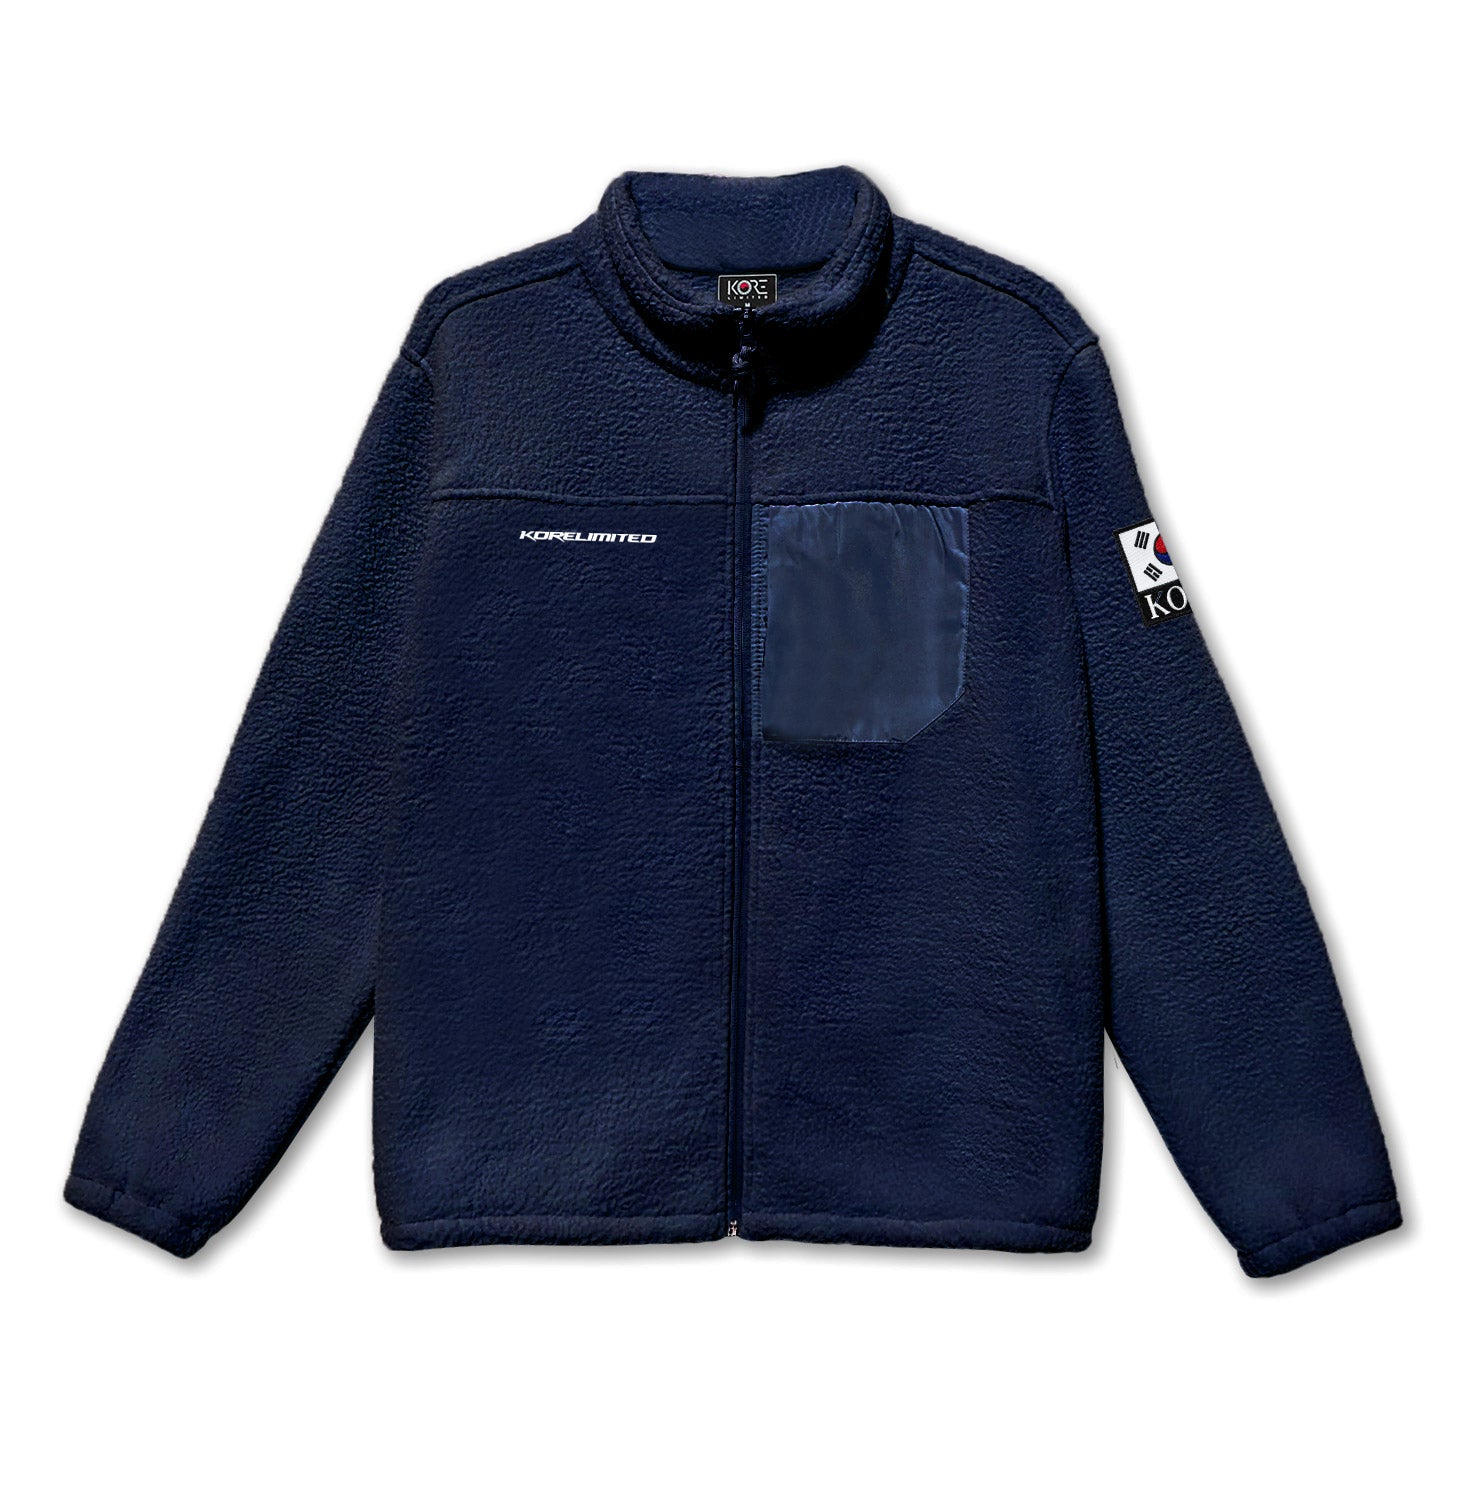 KORE Sherpa Jacket in Navy with Patch | Shop Korean Streetwear ...